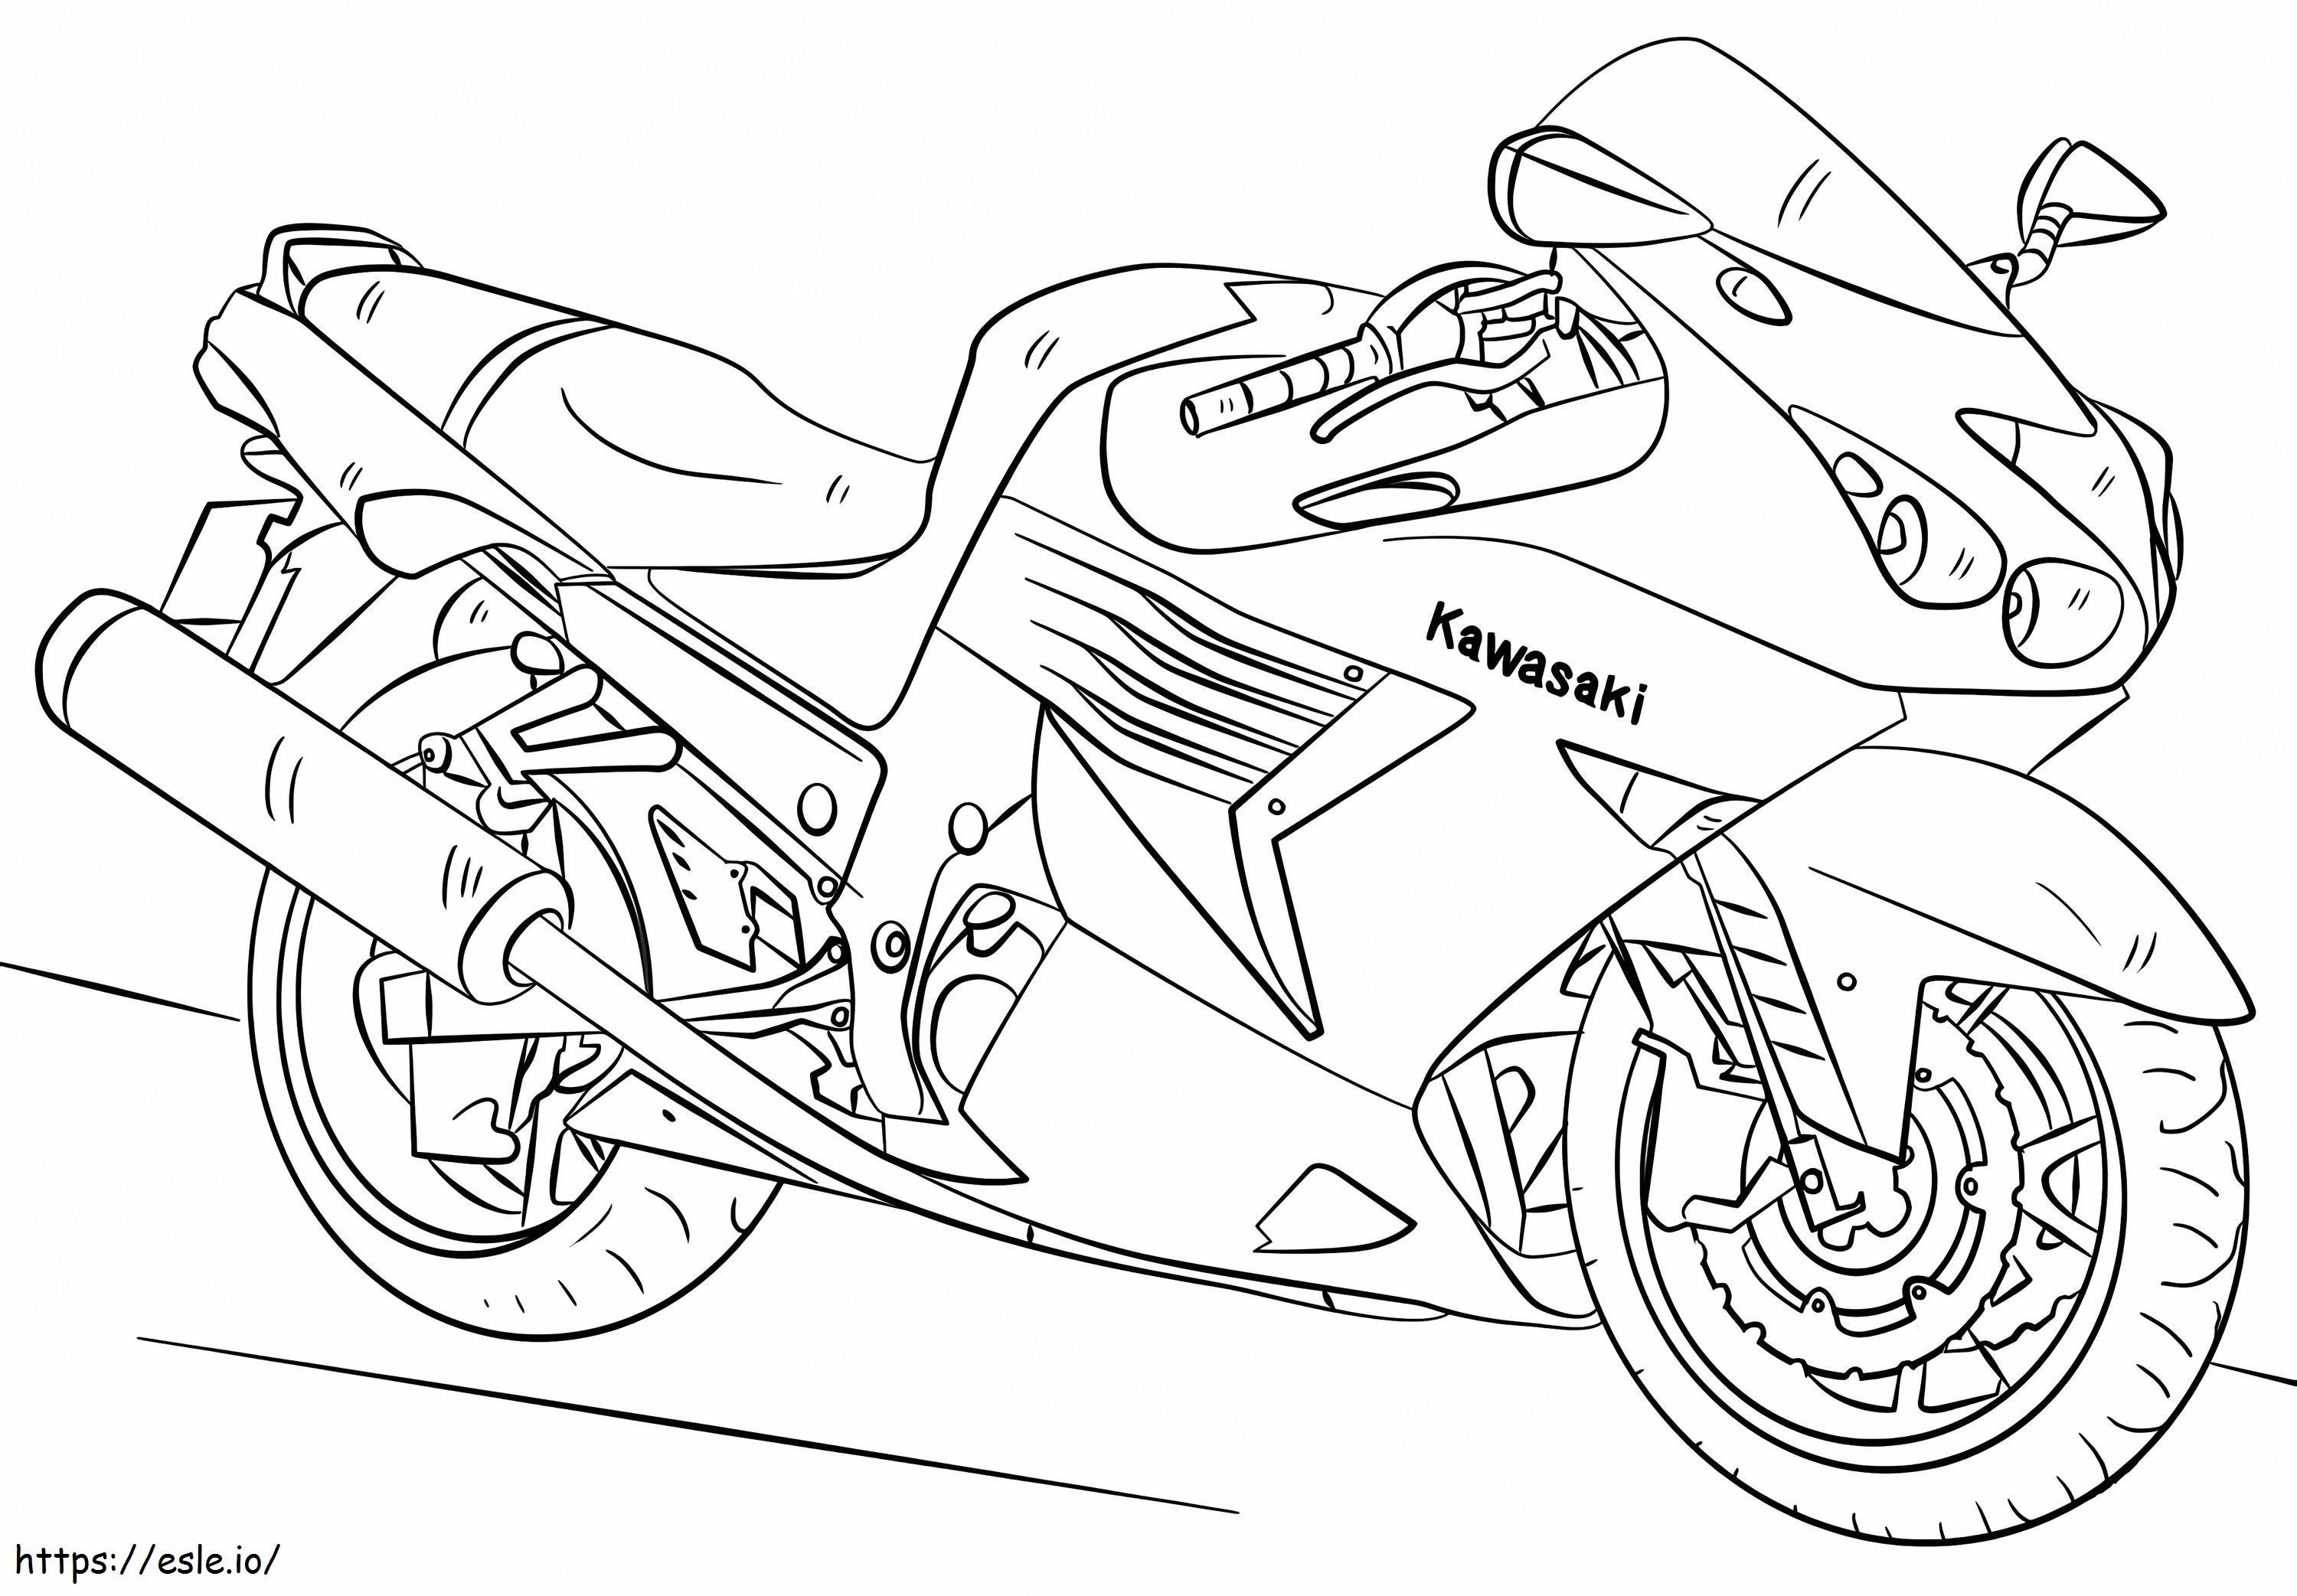 Kawasaki-motorfiets kleurplaat kleurplaat